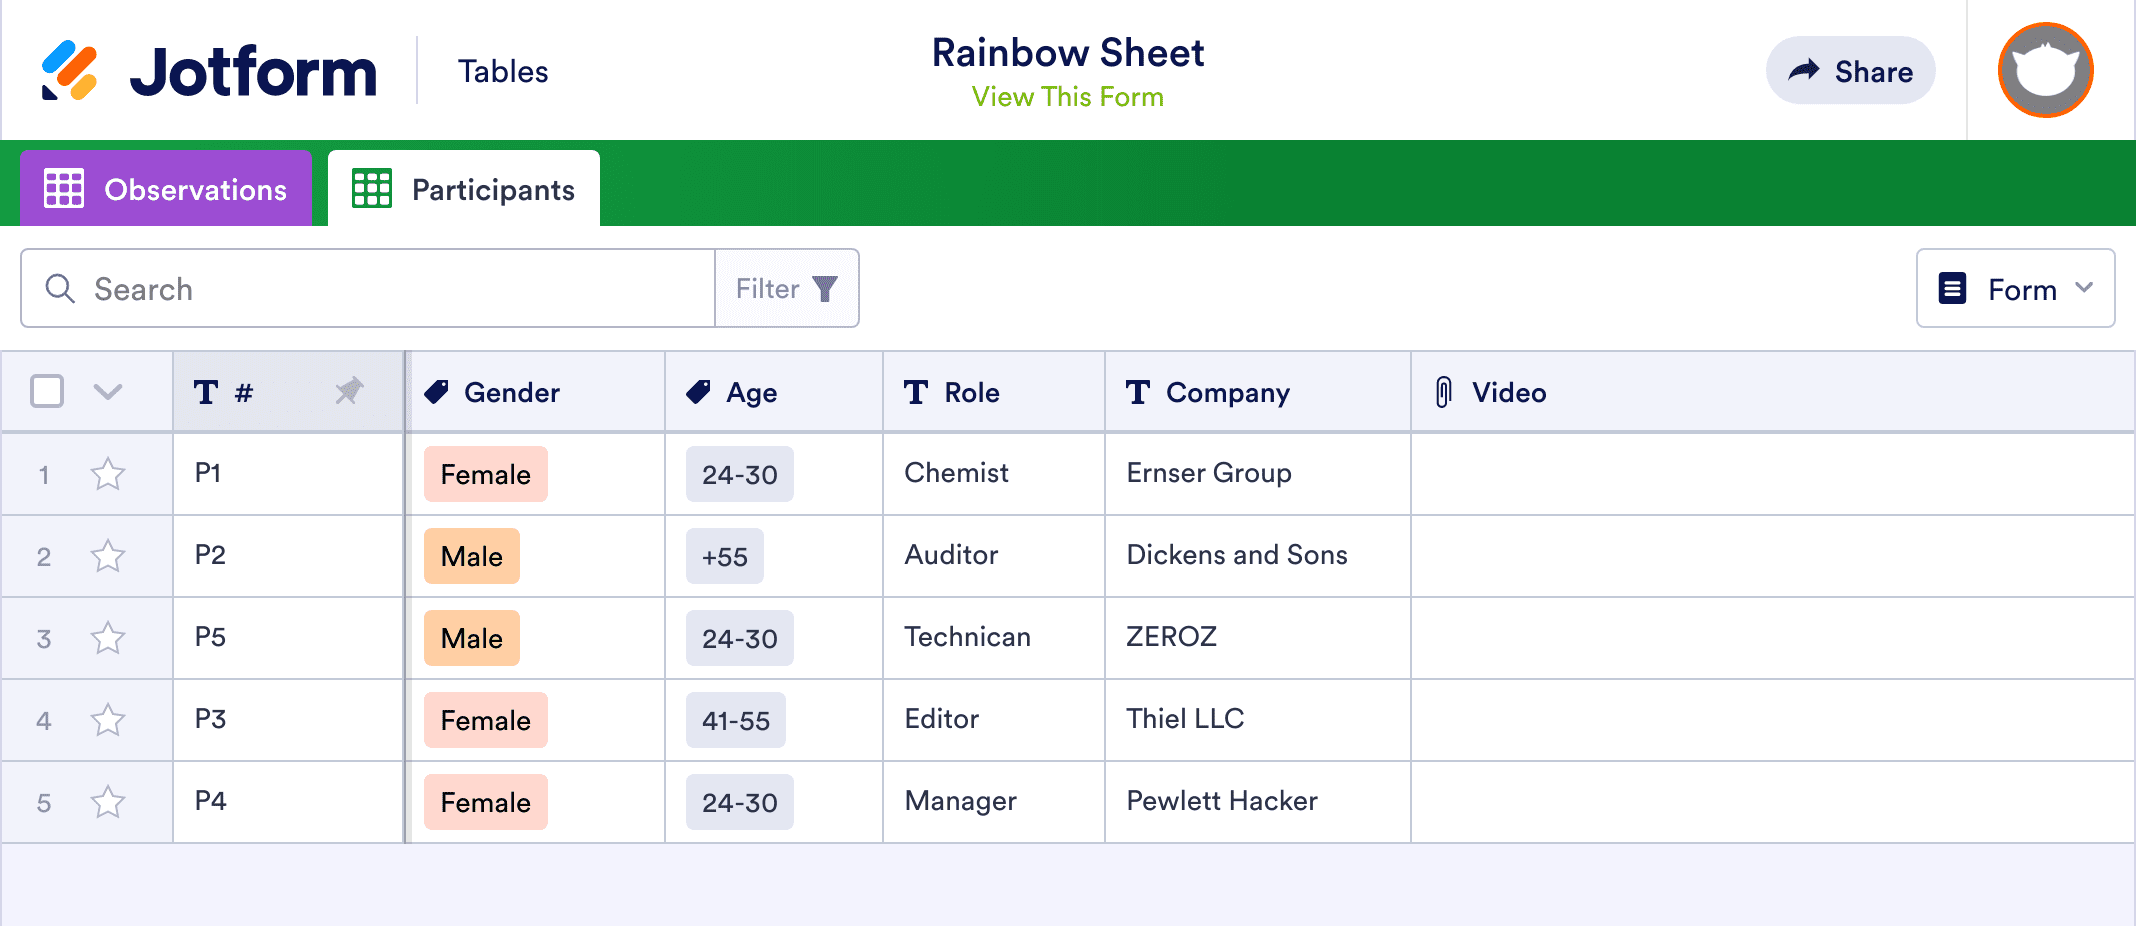 Rainbow Sheet